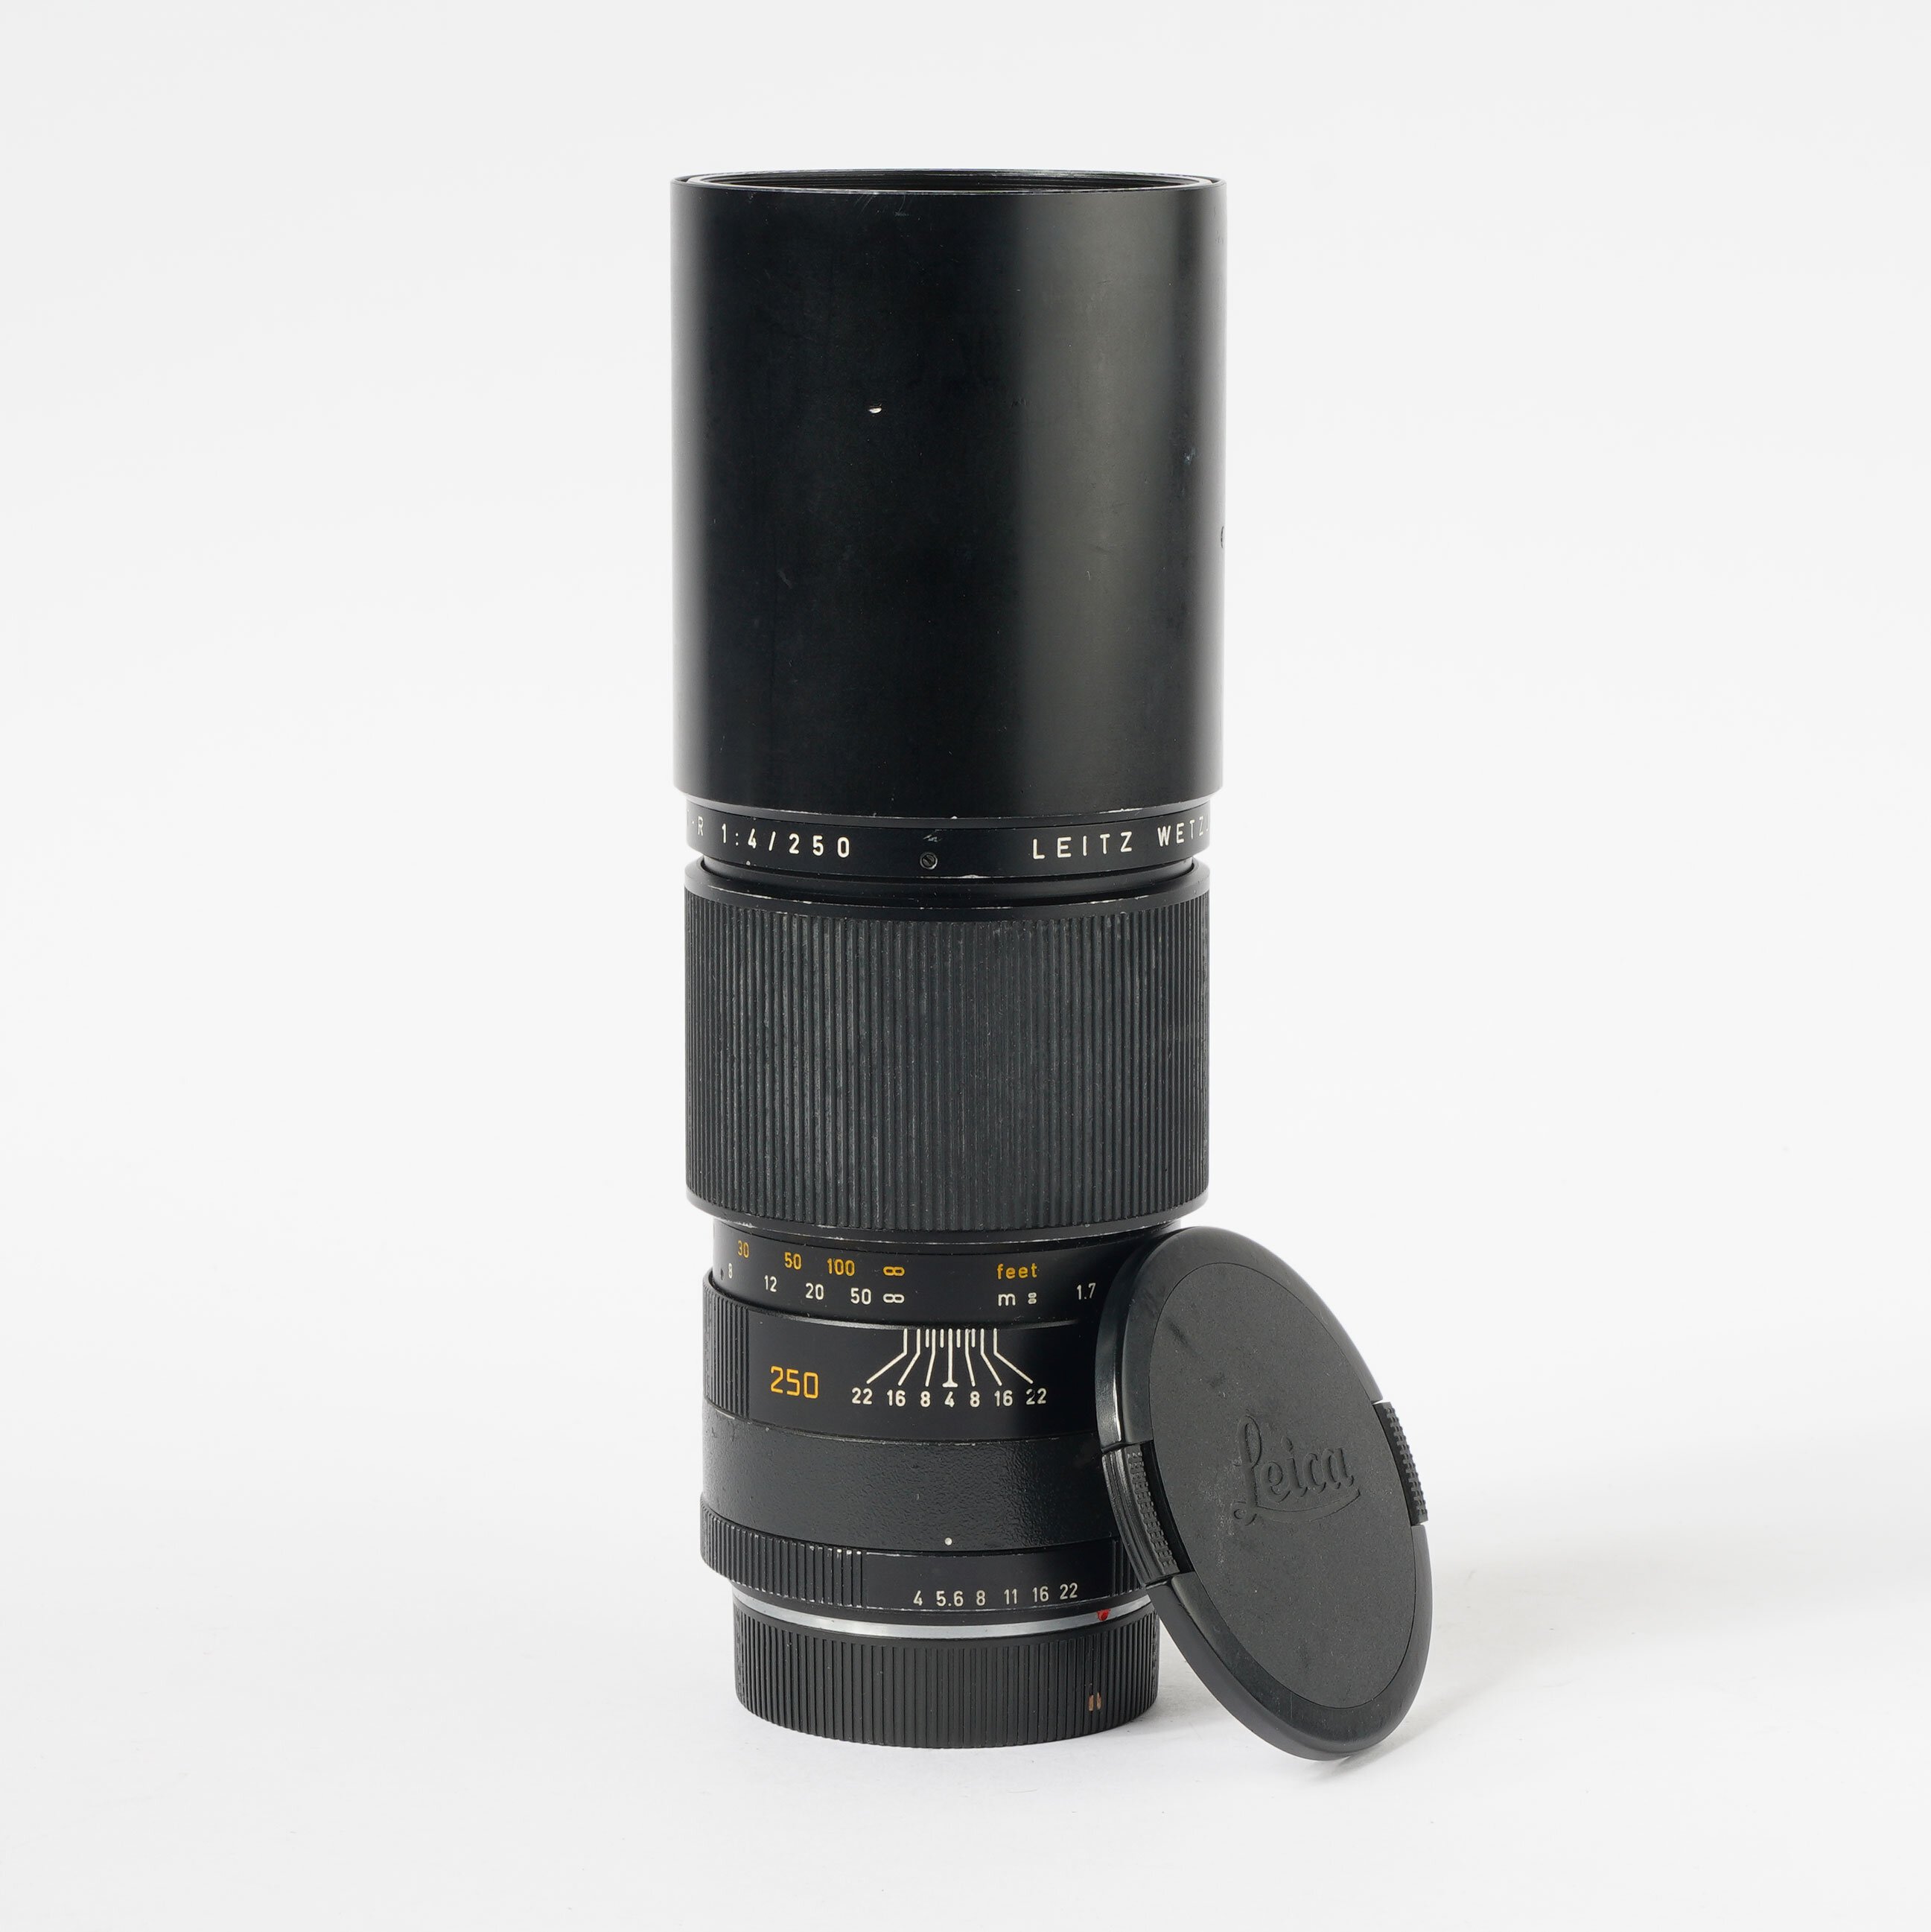 Leica Telyt-R 4/250mm 3CAM